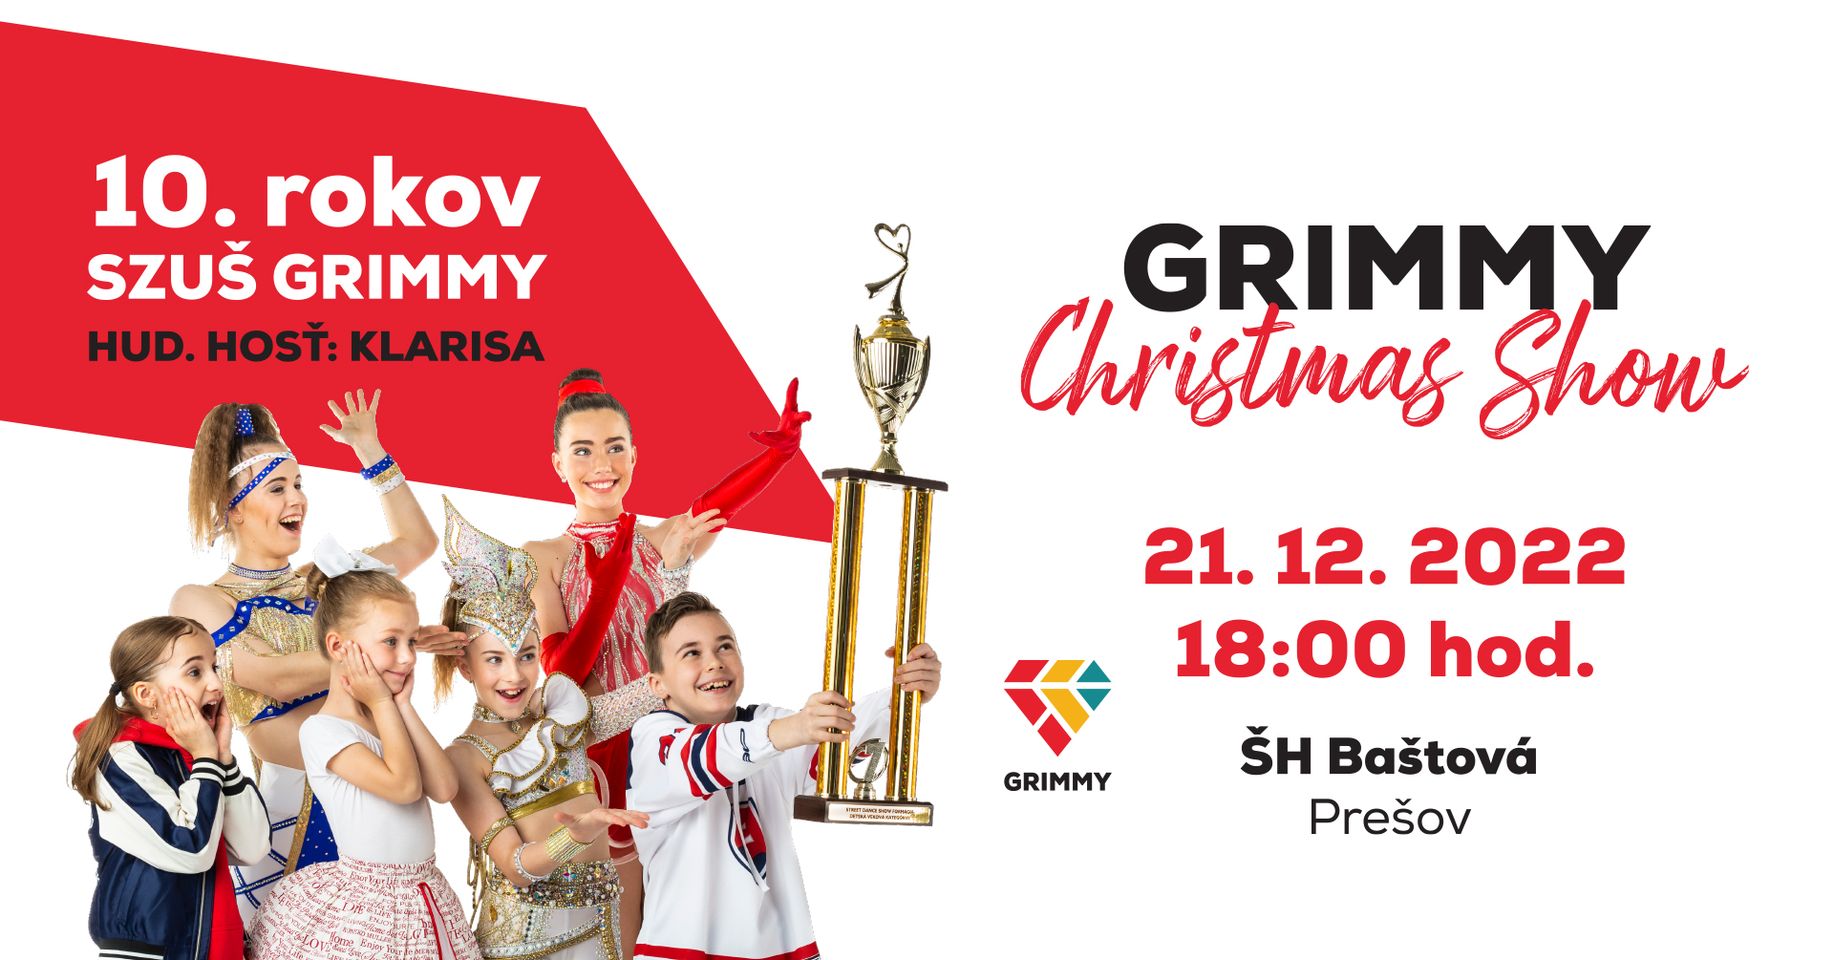 10 rokov SZUŠ GRIMMY (Grimmy Christmas Show)